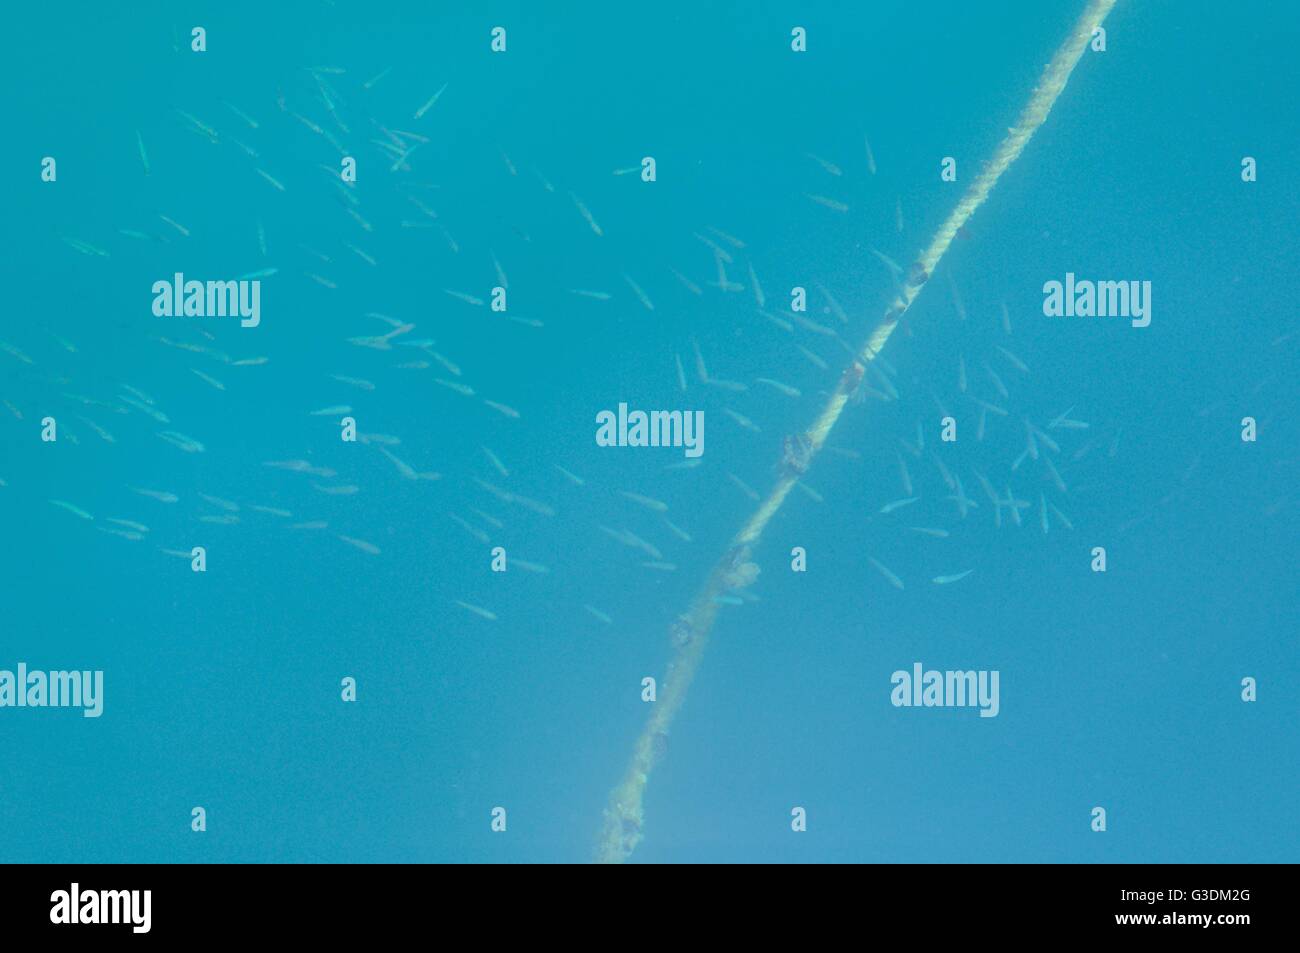 Group of small fish underwater Stock Photo